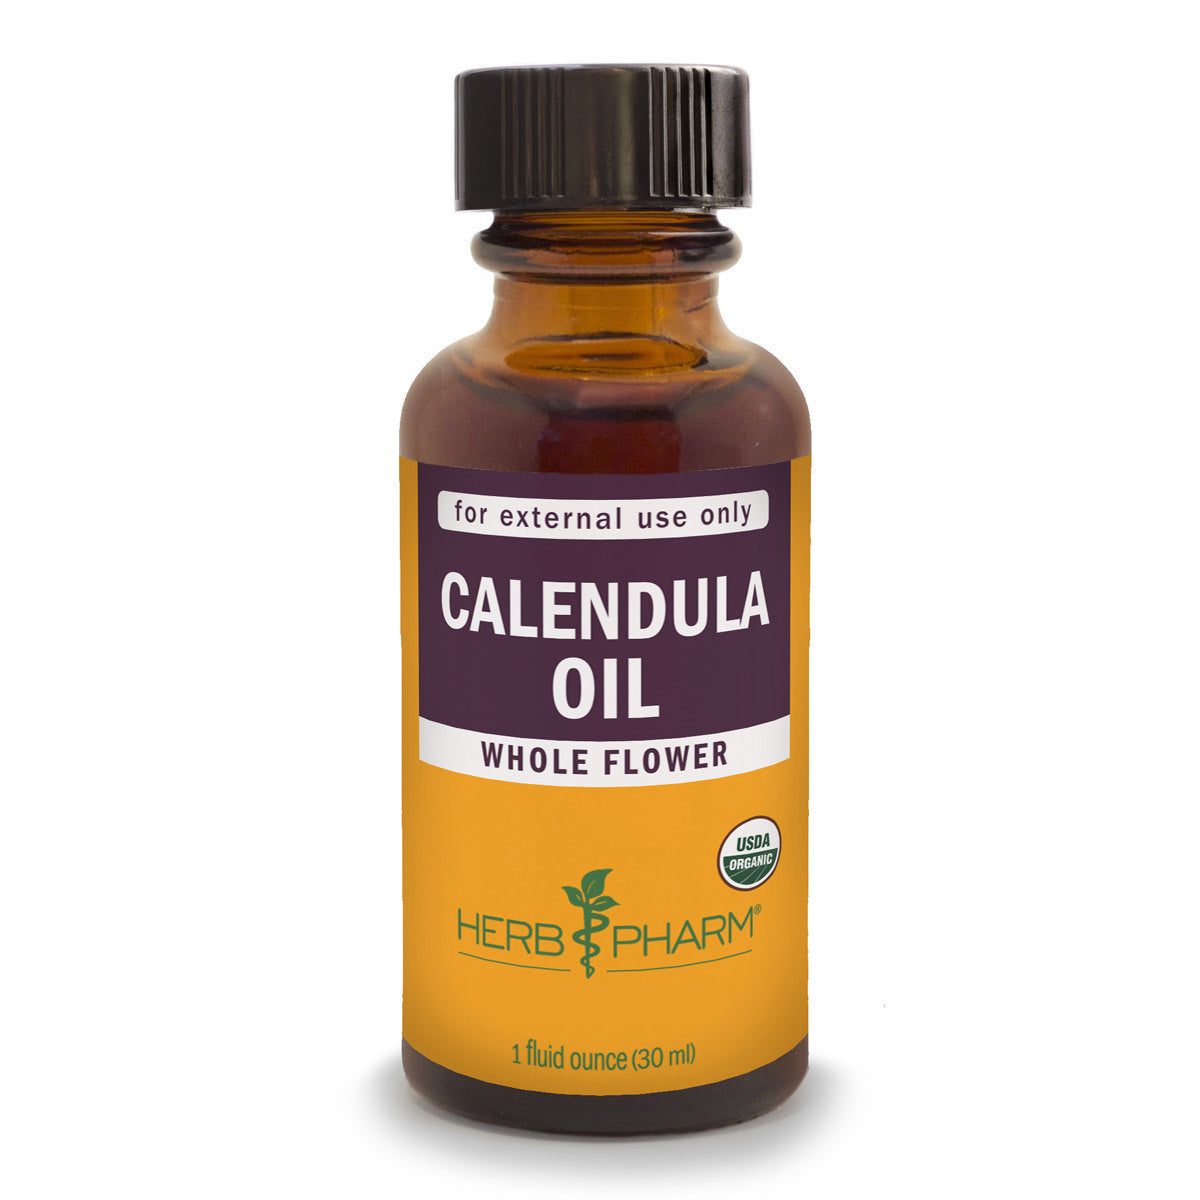 Primary image of Calendula Oil